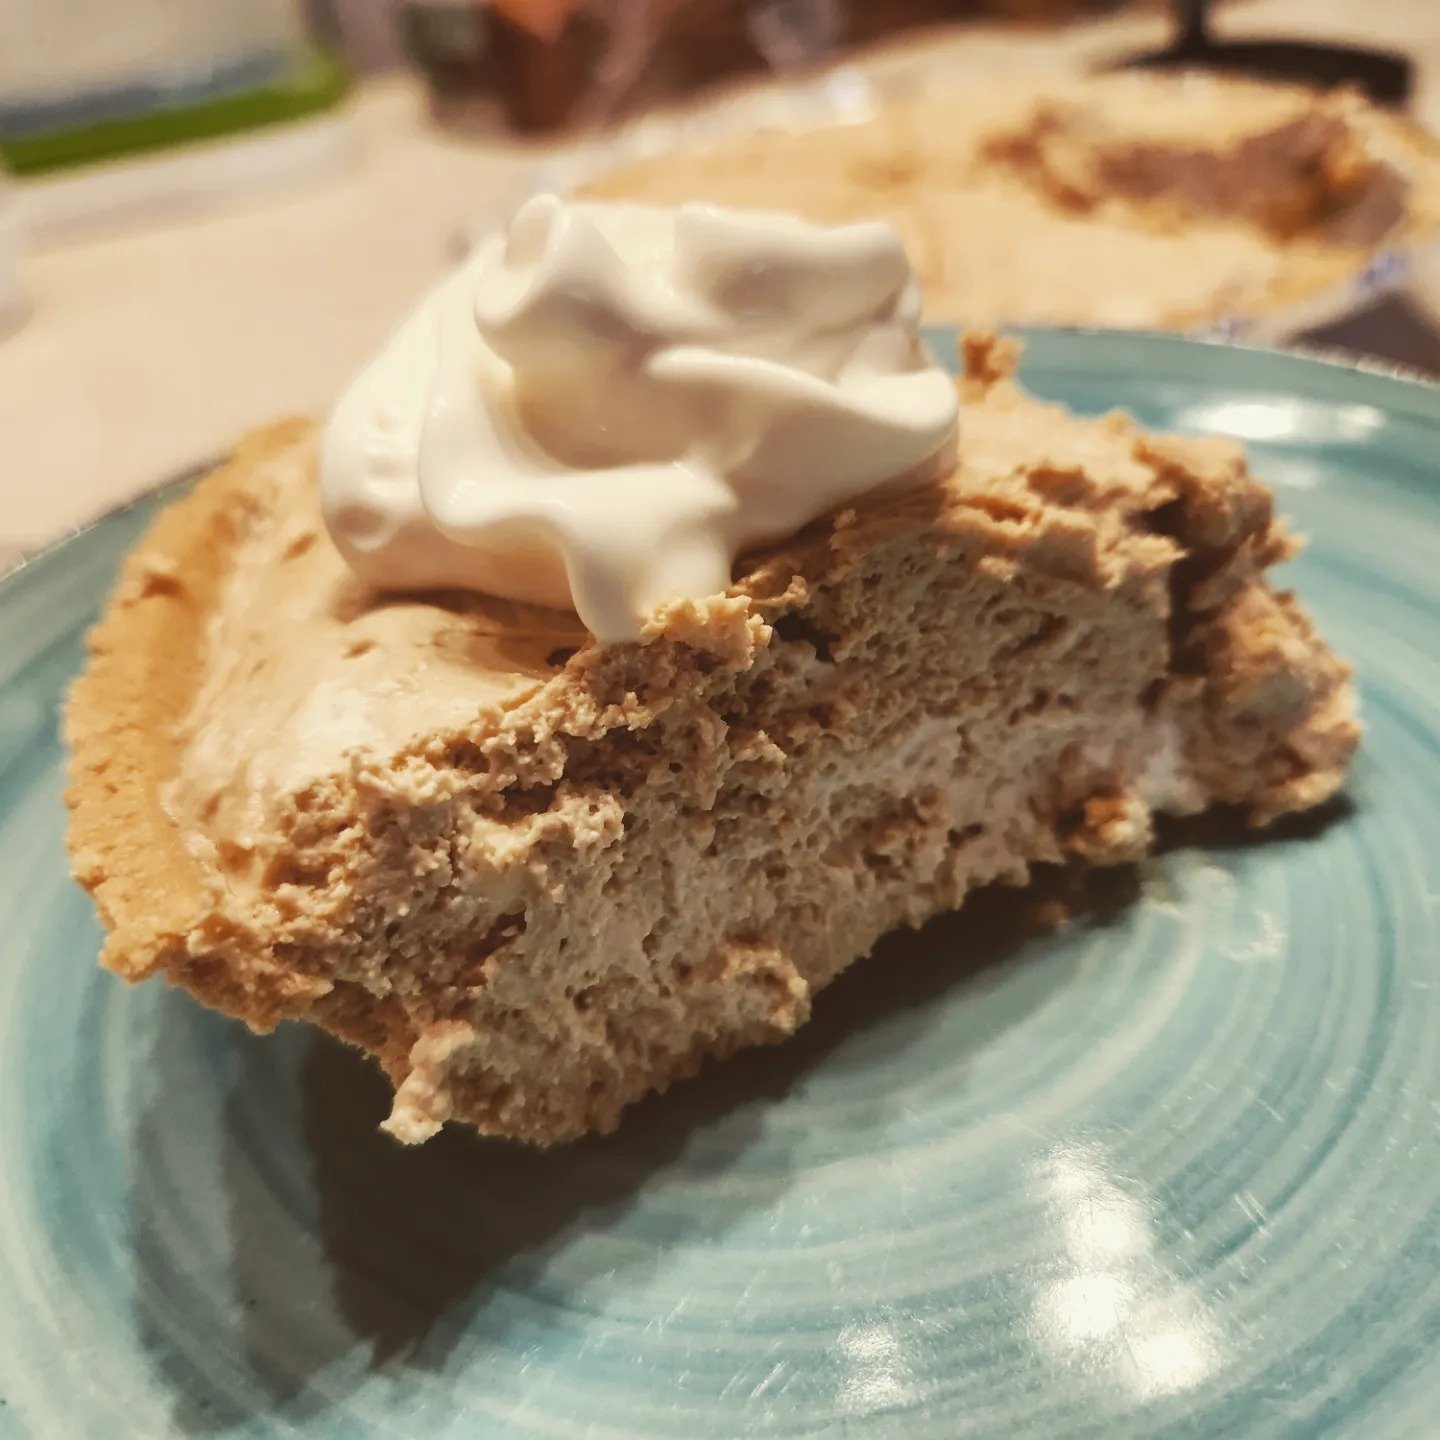 Cookie Butter Pie